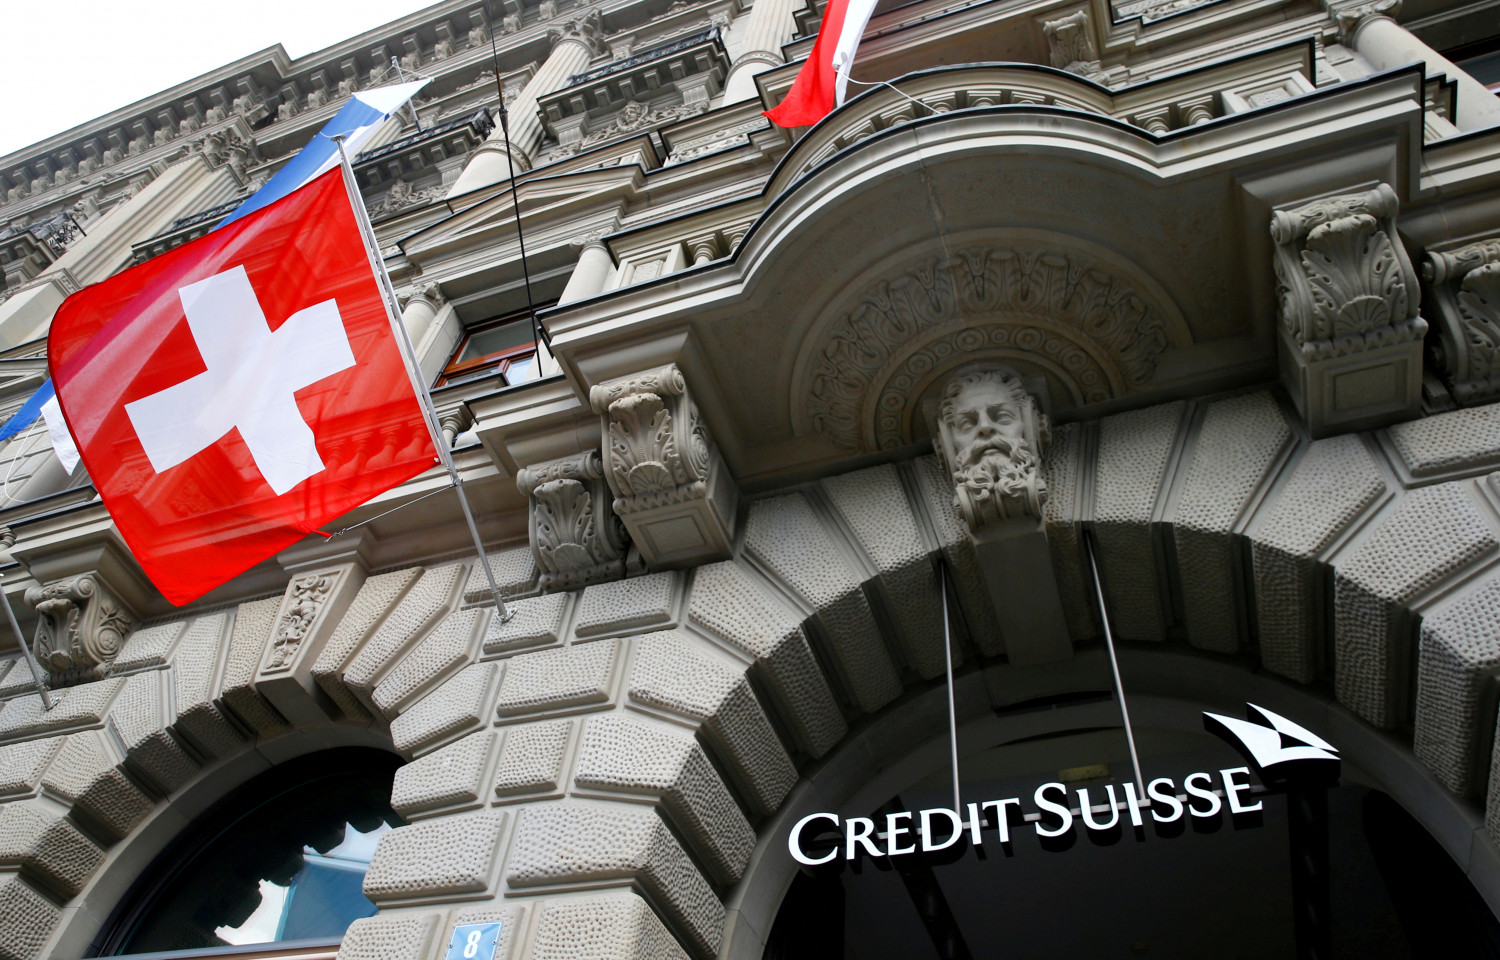 credit suisse compte recuperer un pret de 140 millions de dollars a greensill 20210422084125 